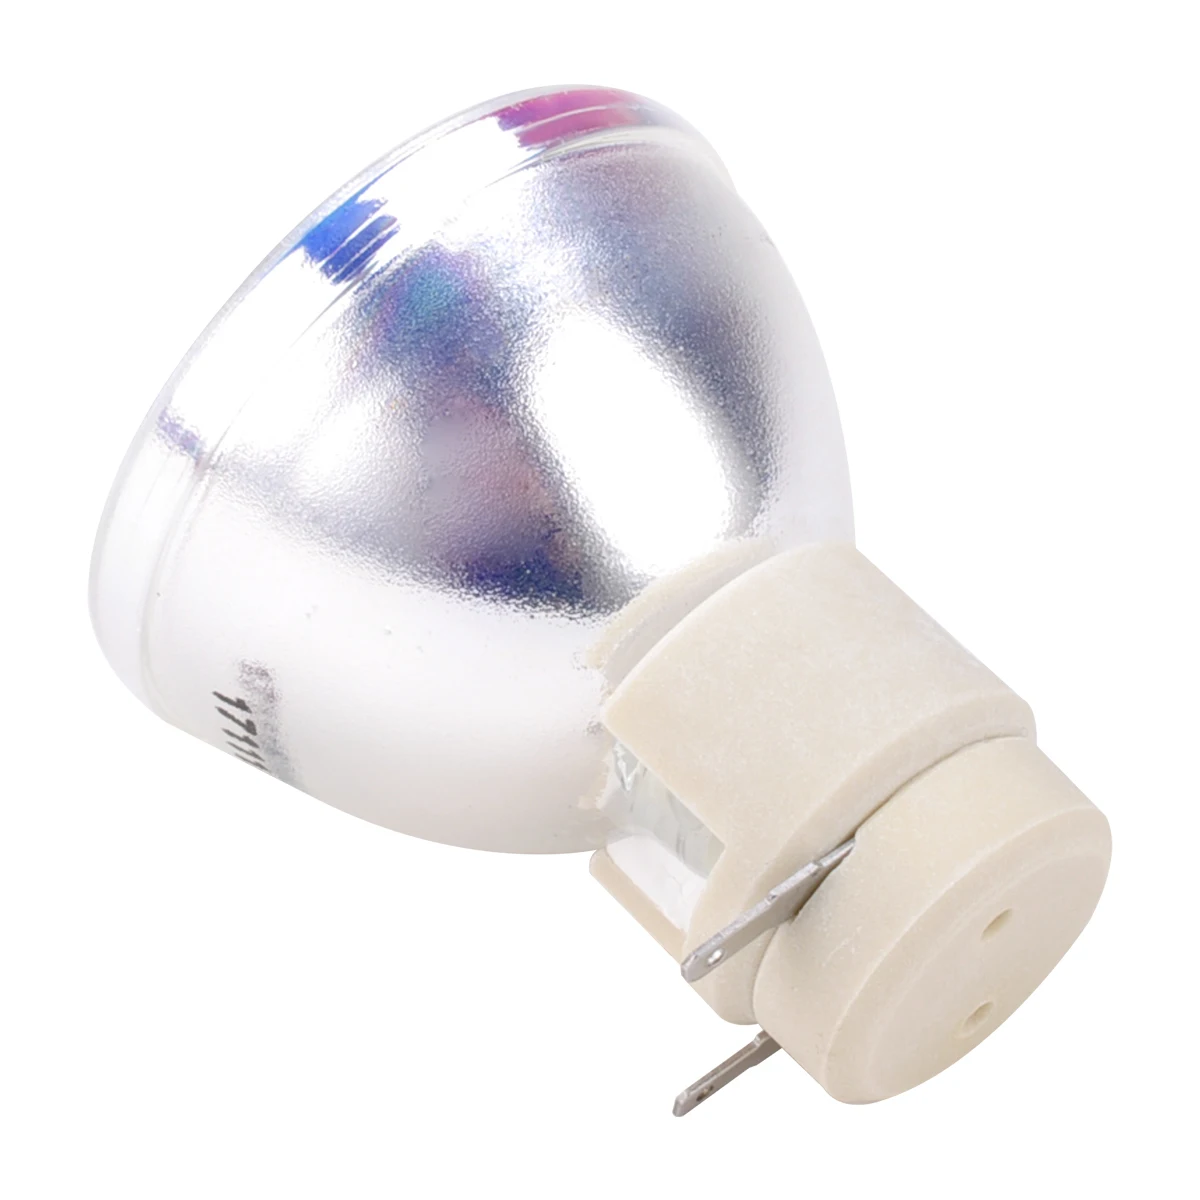 Epson EX5230 Projector Housing w/ High Quality Bulb